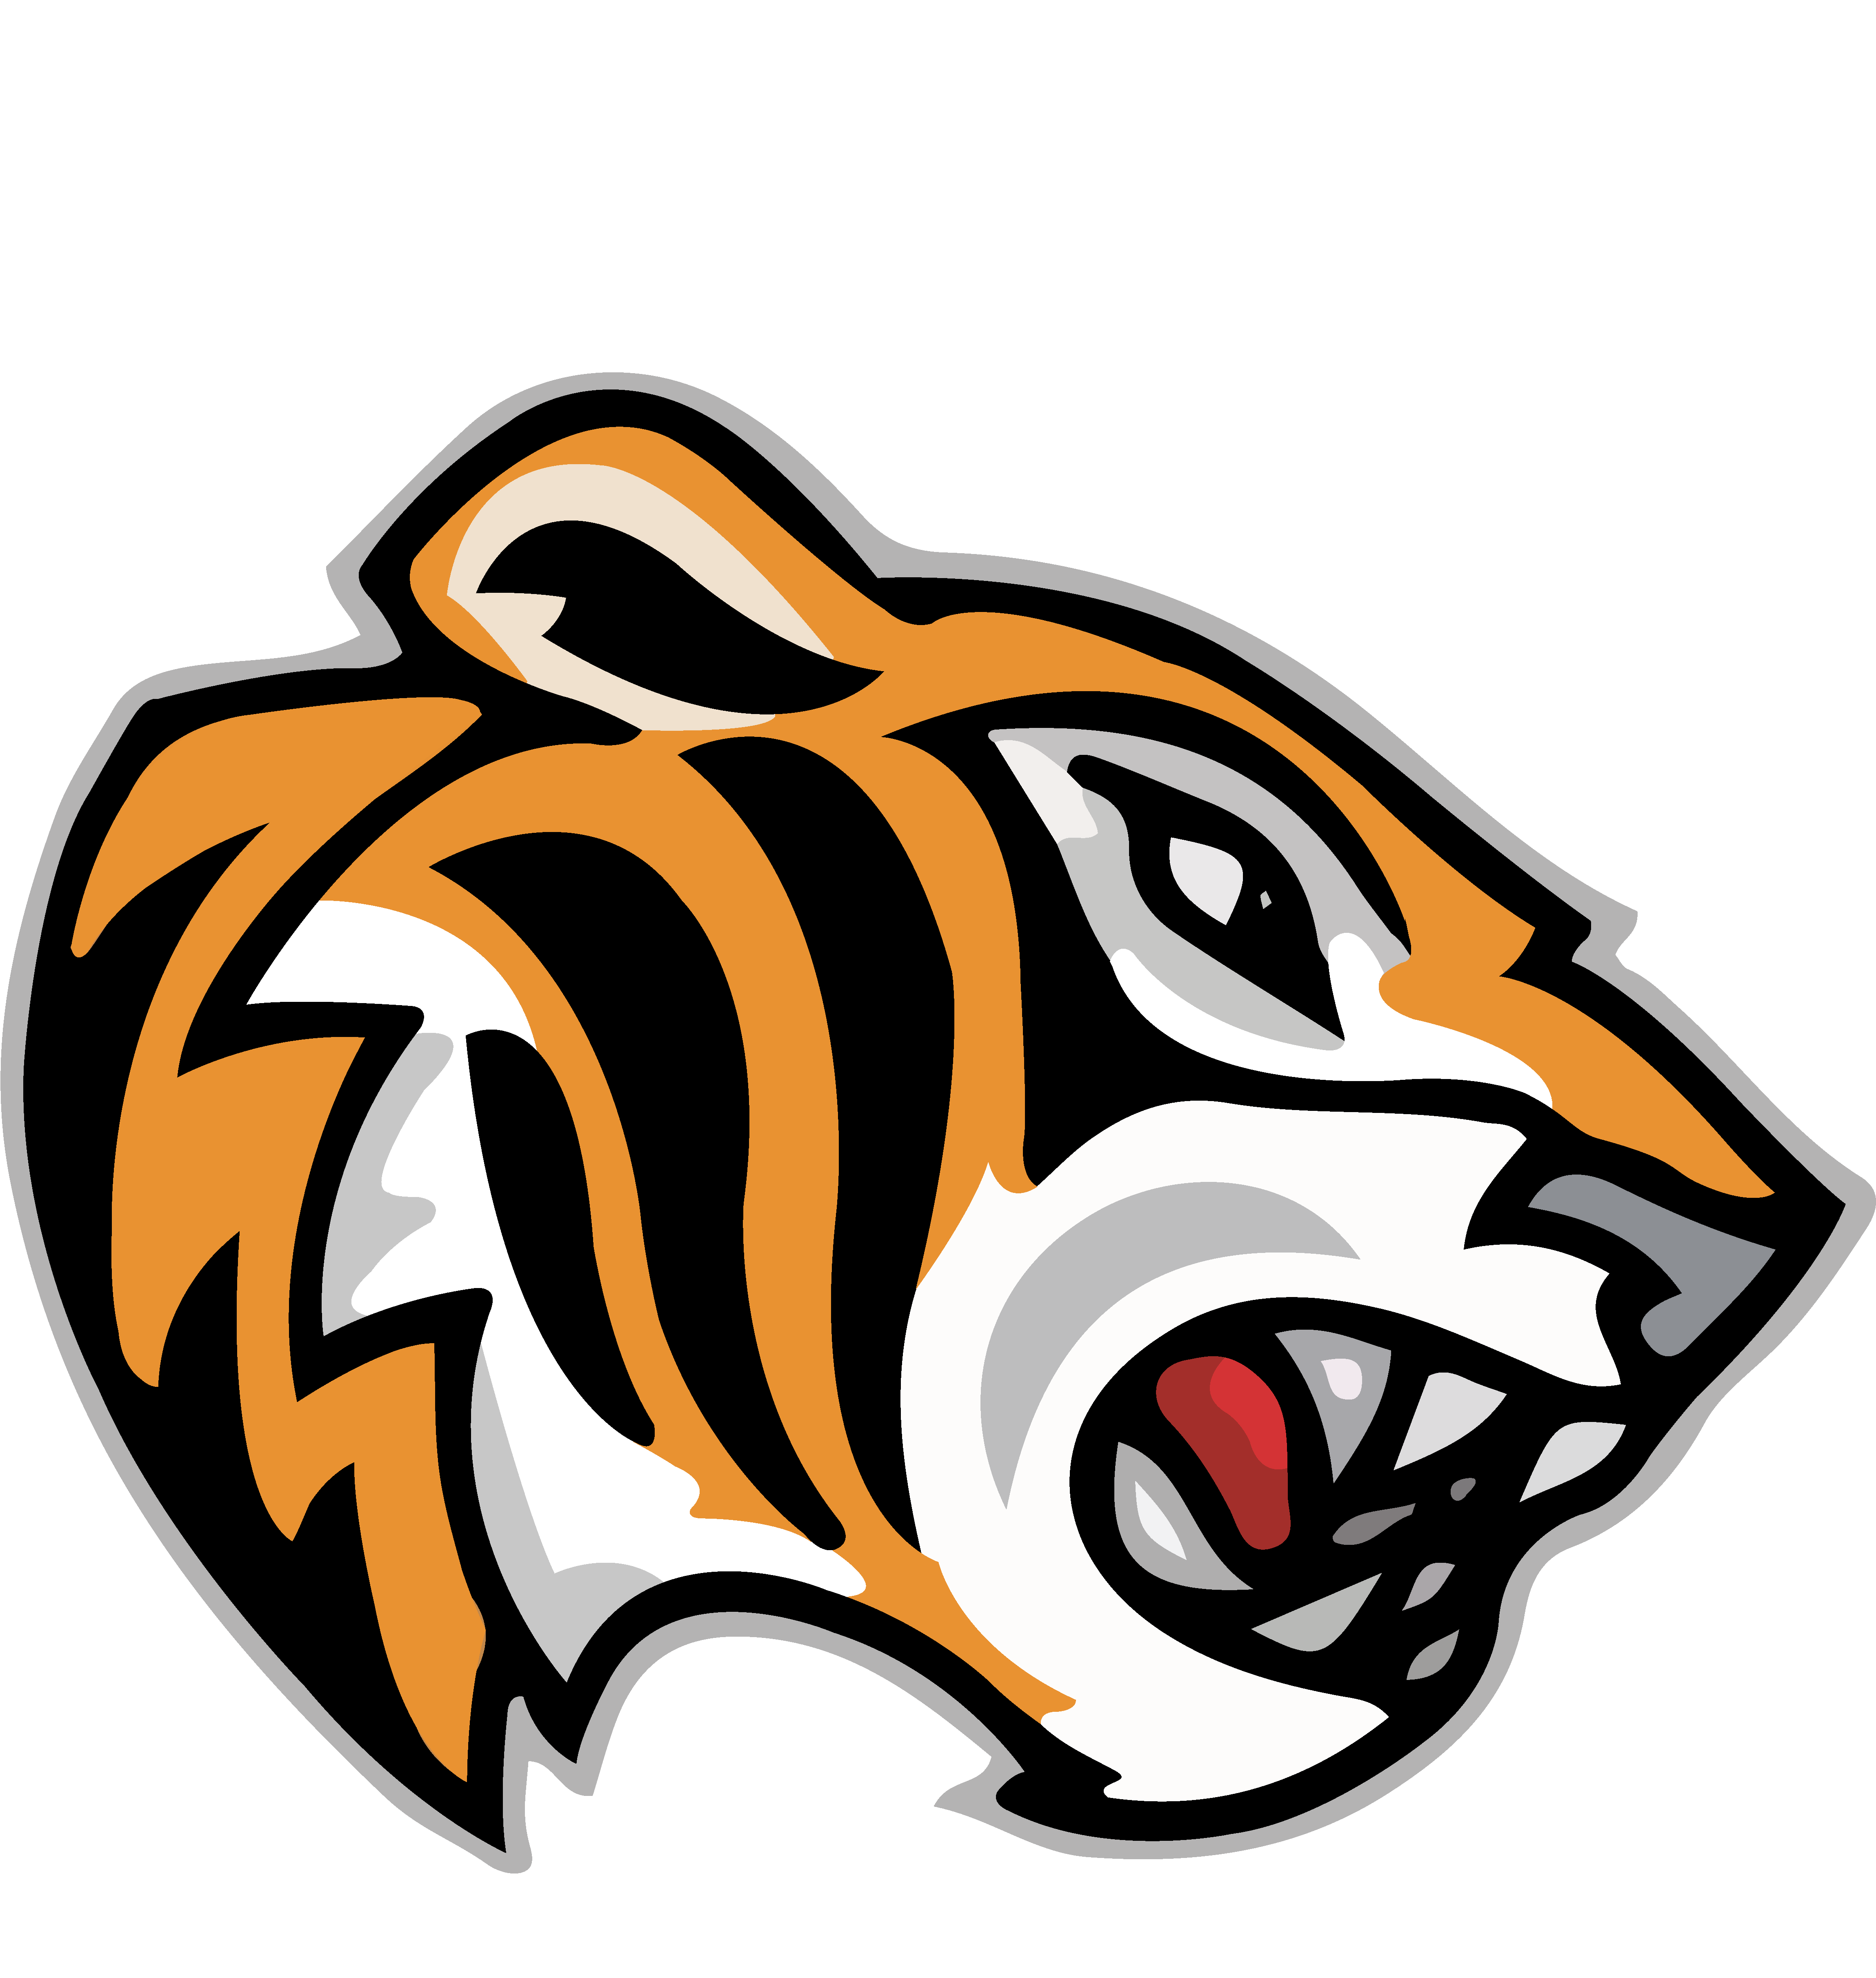 Logo Good Elementary School - Cove Tigers Netball (5067x4844)